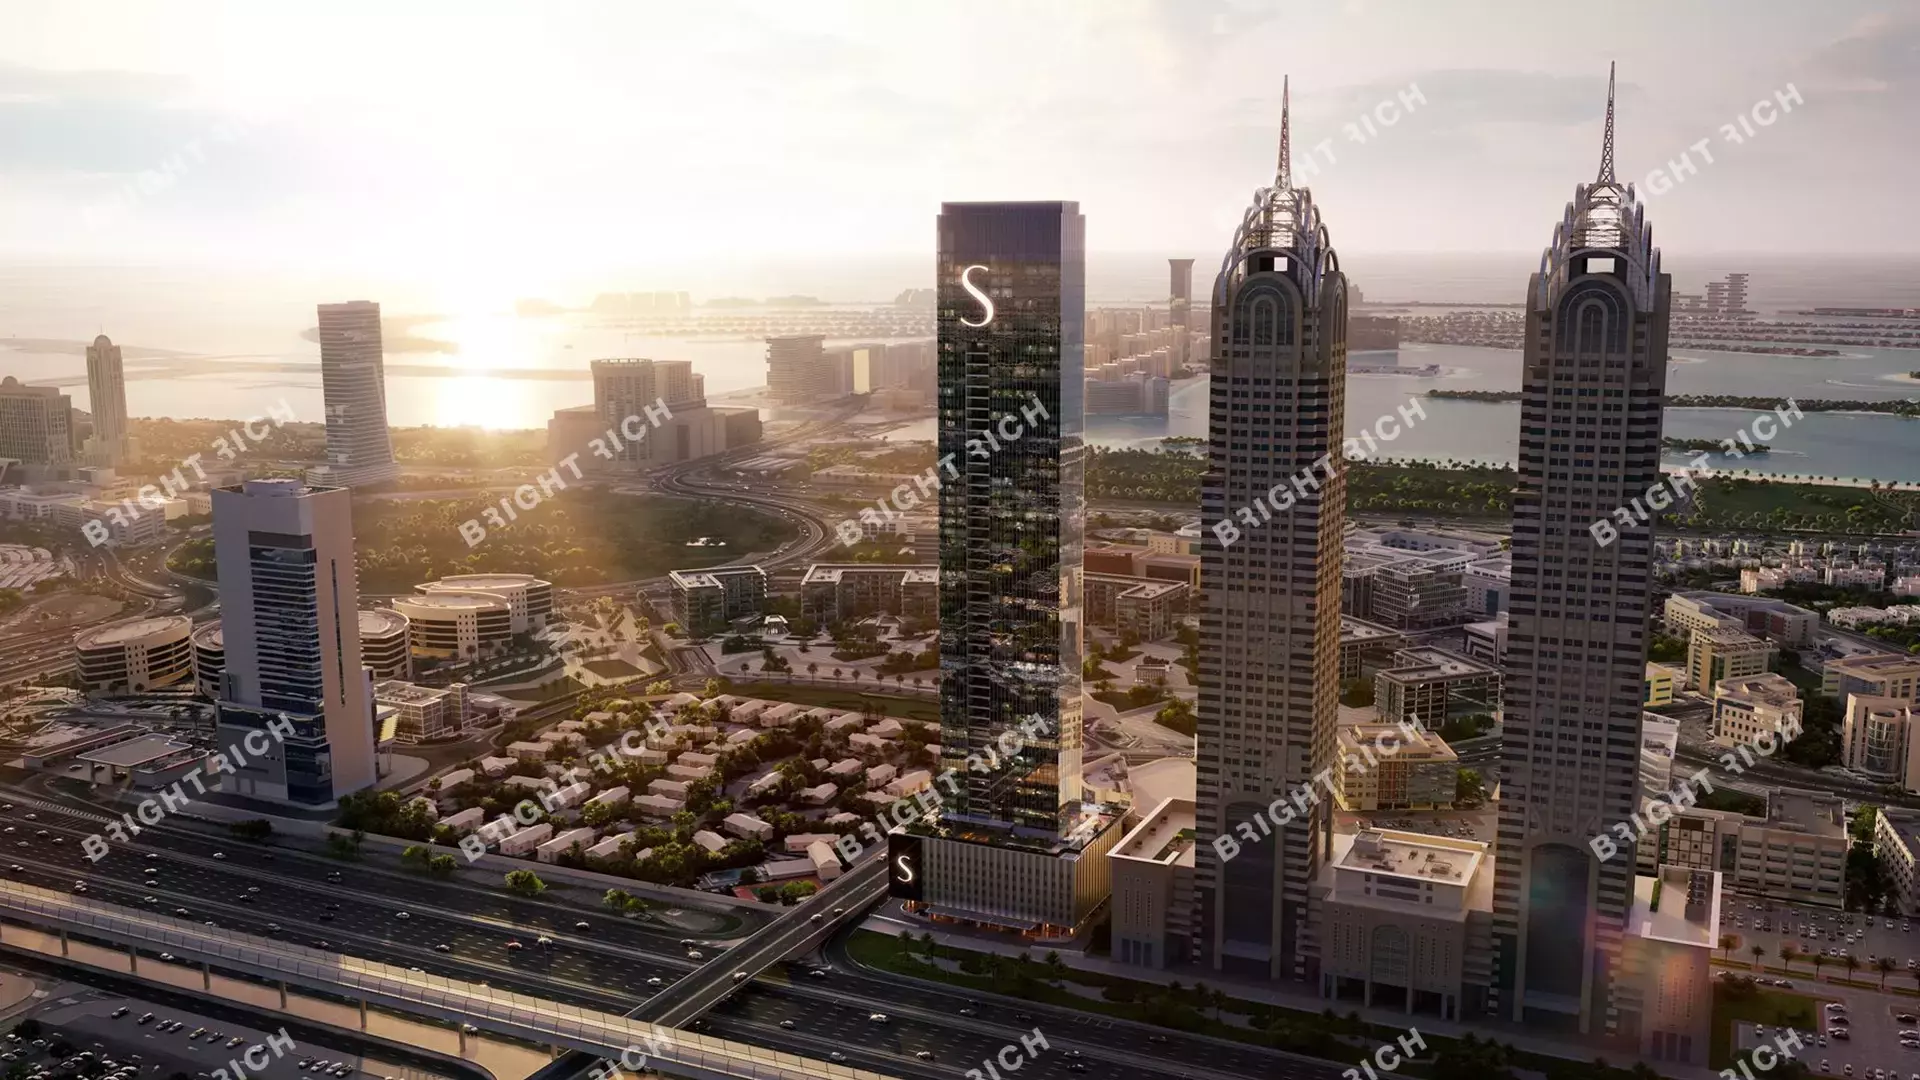 The S, апарт-комплекс в Дубае